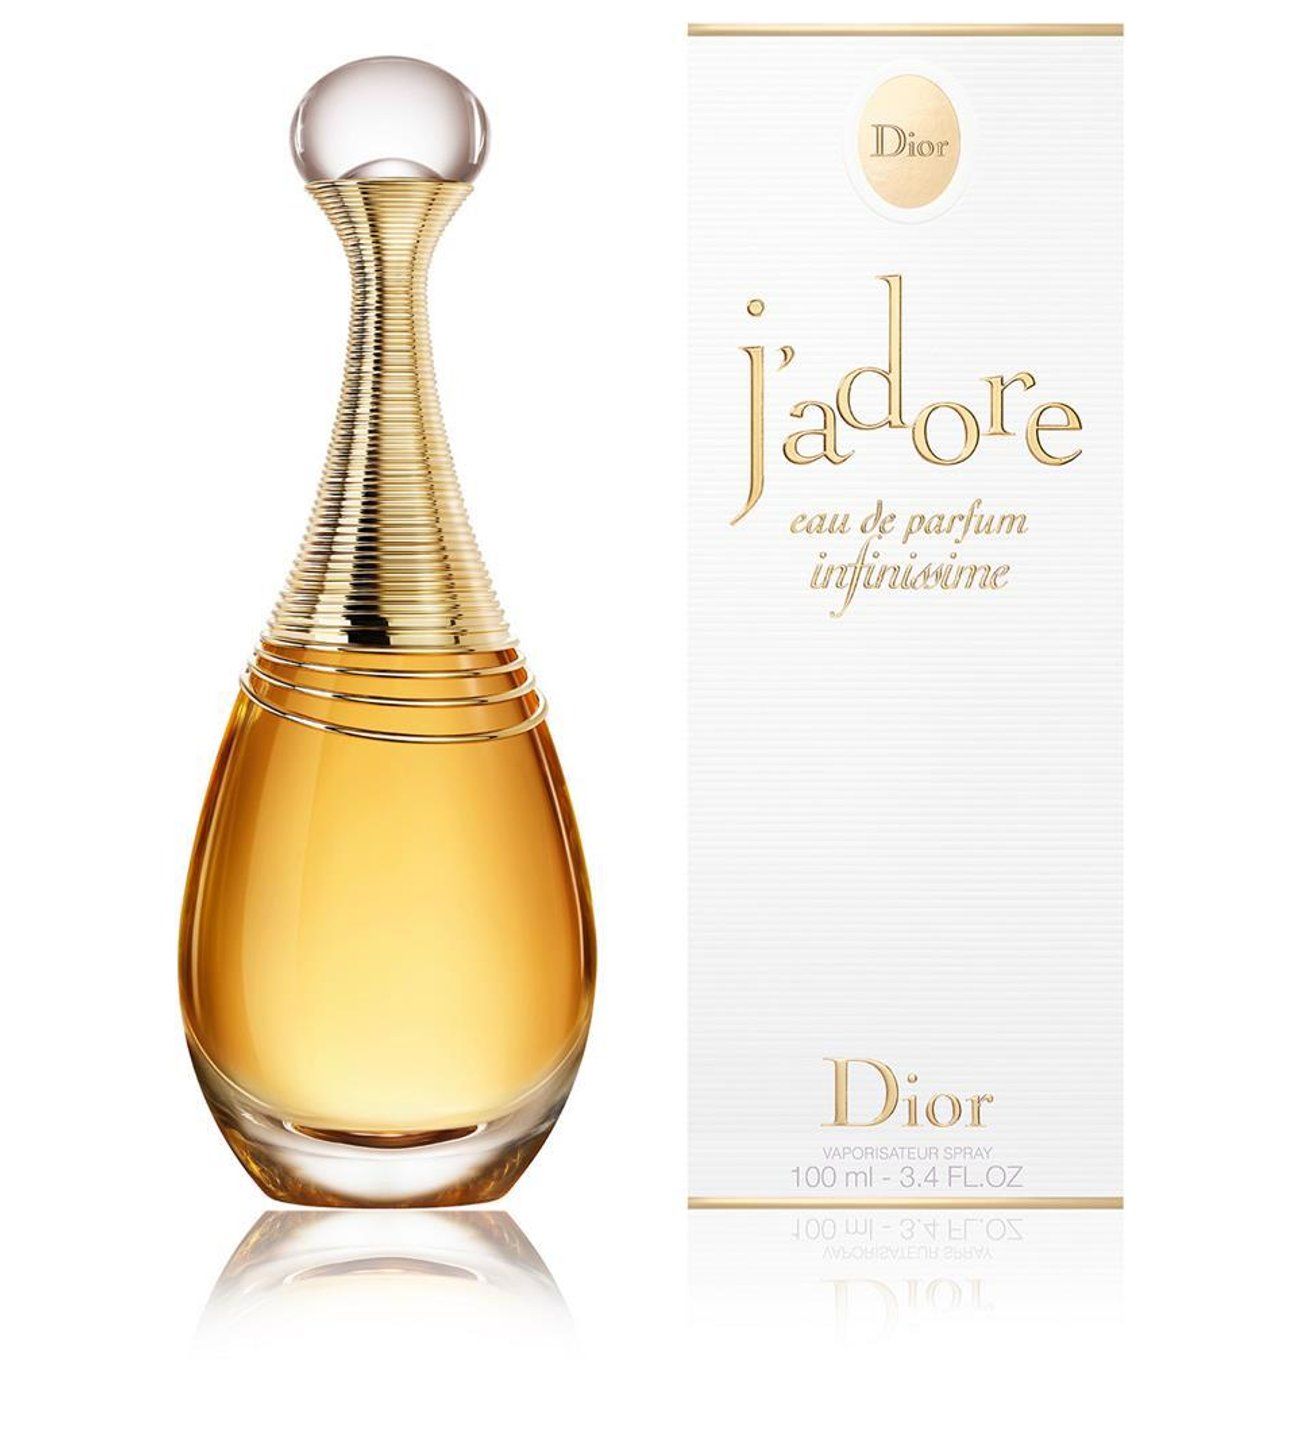 Ароматы диор женские описание. Christian Dior "j'adore EDP" 50 ml. Диор жадор 100 мл. Christian Dior Jadore EDP, 100ml. Dior Jadore парфюмерная вода 100 мл.